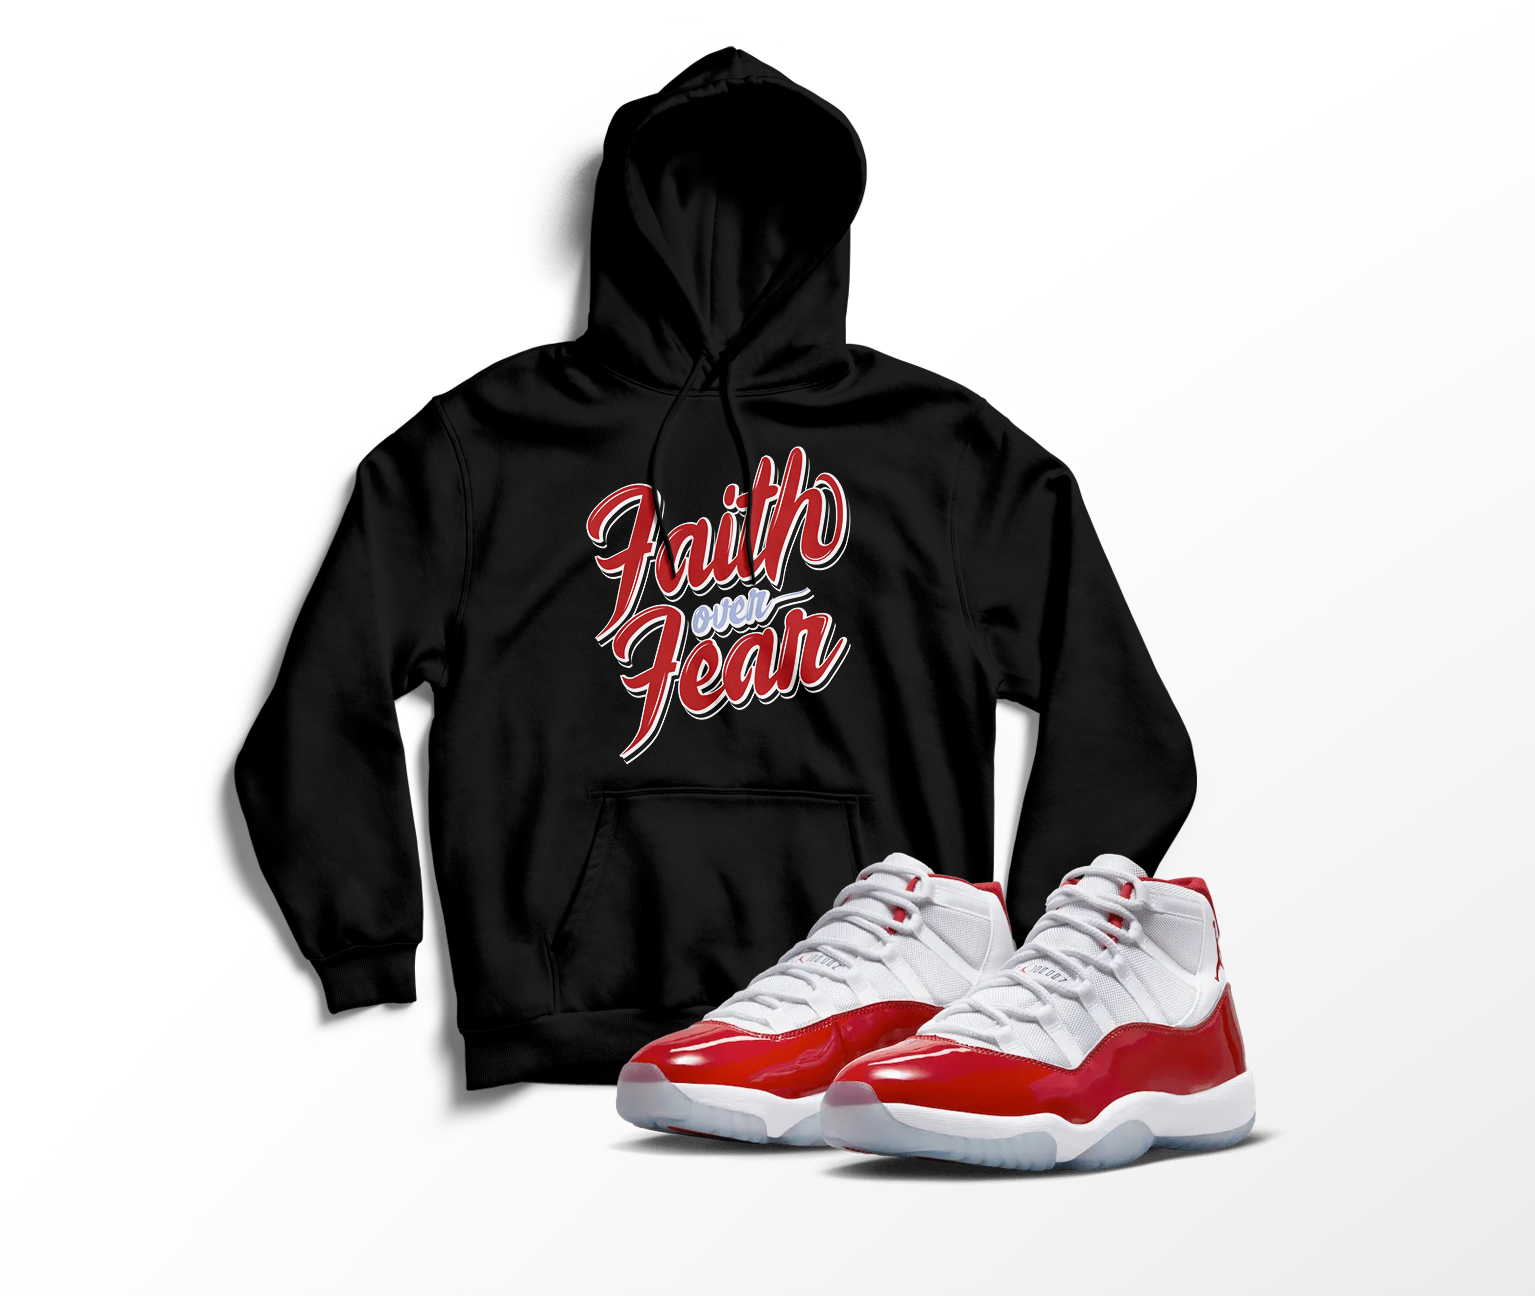 'Faith Over Fear' Custom Graphic Hoodie To Match Air Jordan 11 Cherry Red